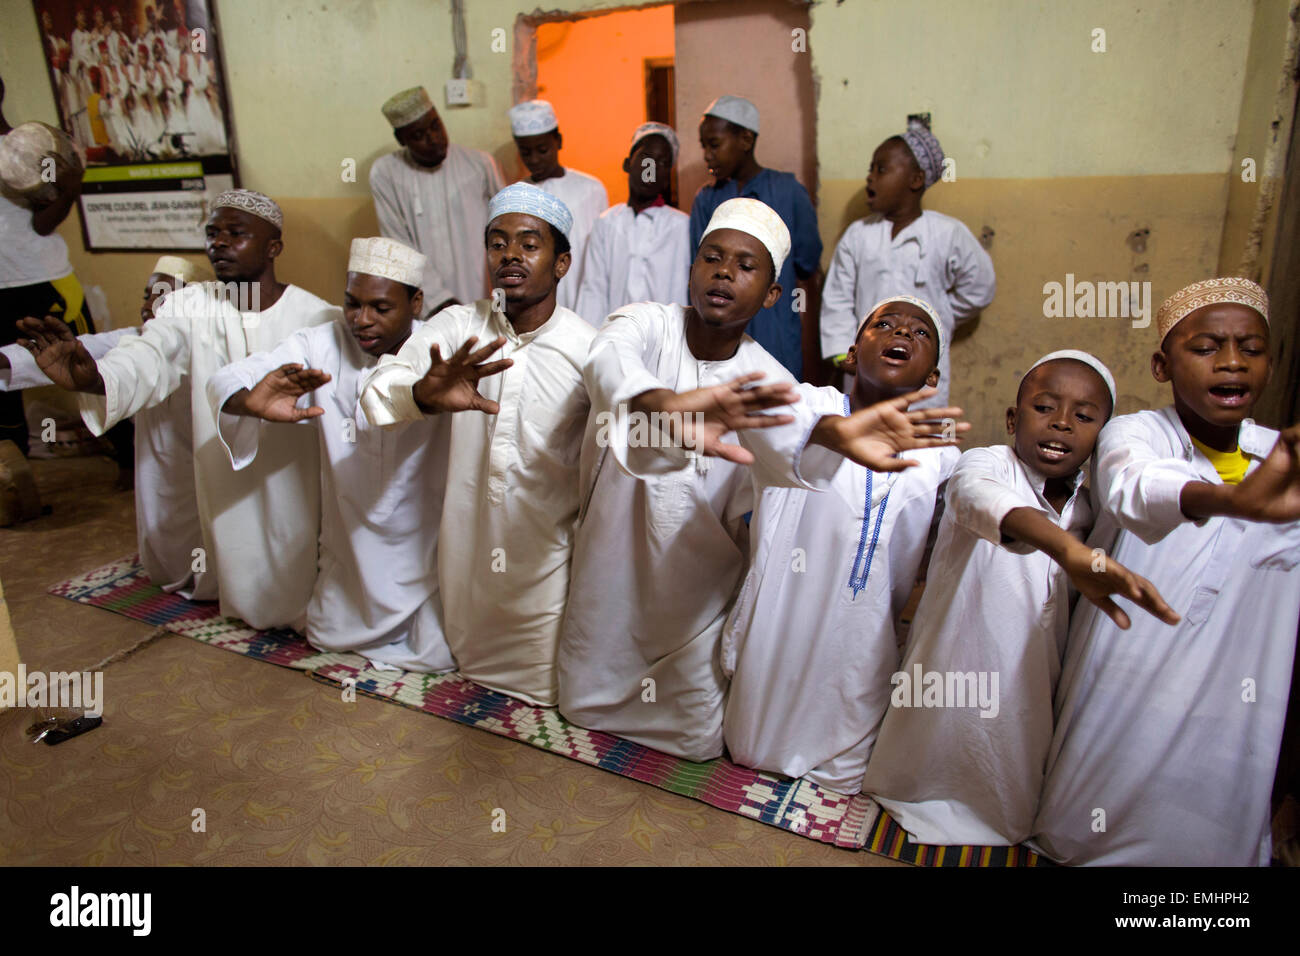 Mtendeni maulid ensemble, sufi religious devotion with arab roots in zanzibar Stock Photo